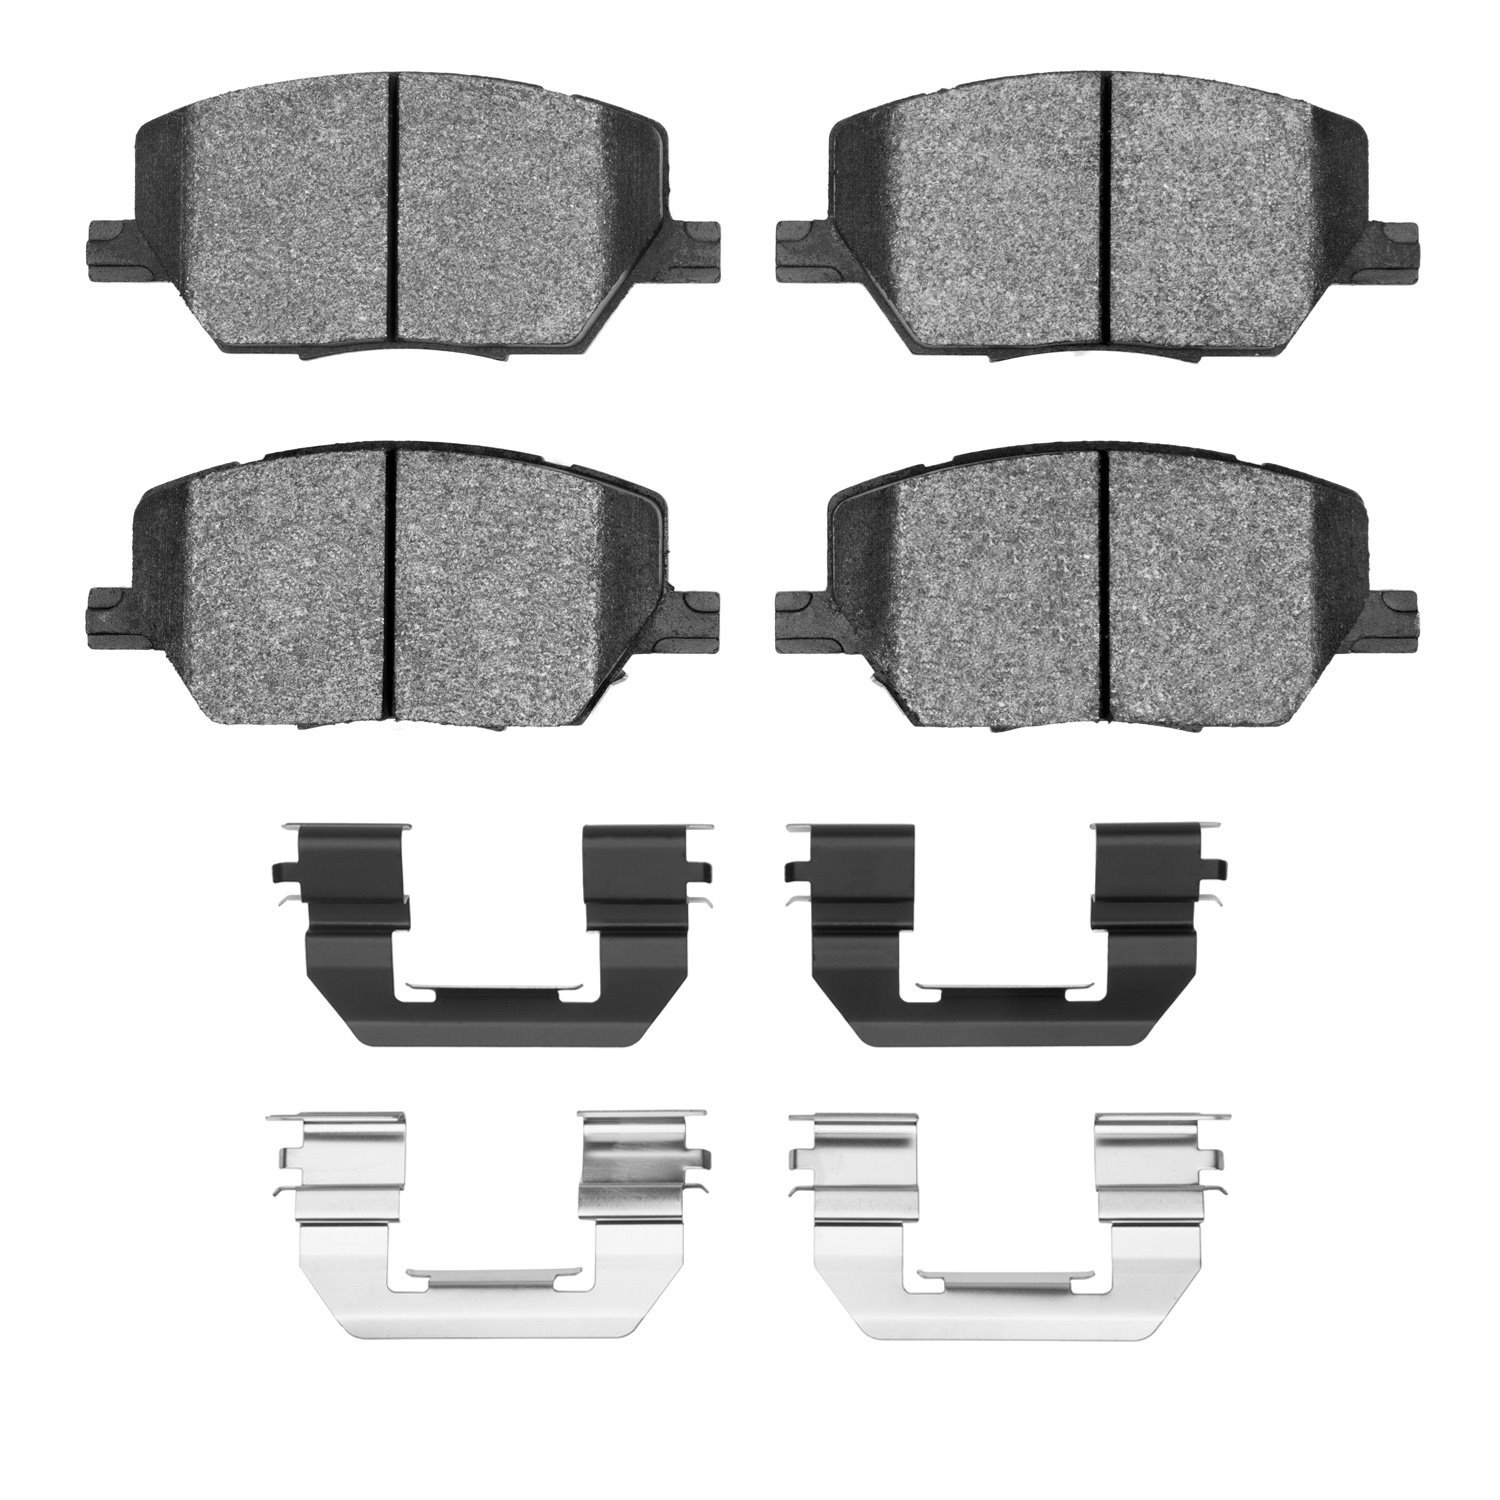 Optimum OE Brake Pads & Hardware Kit, Fits Select Mopar, Position: Front